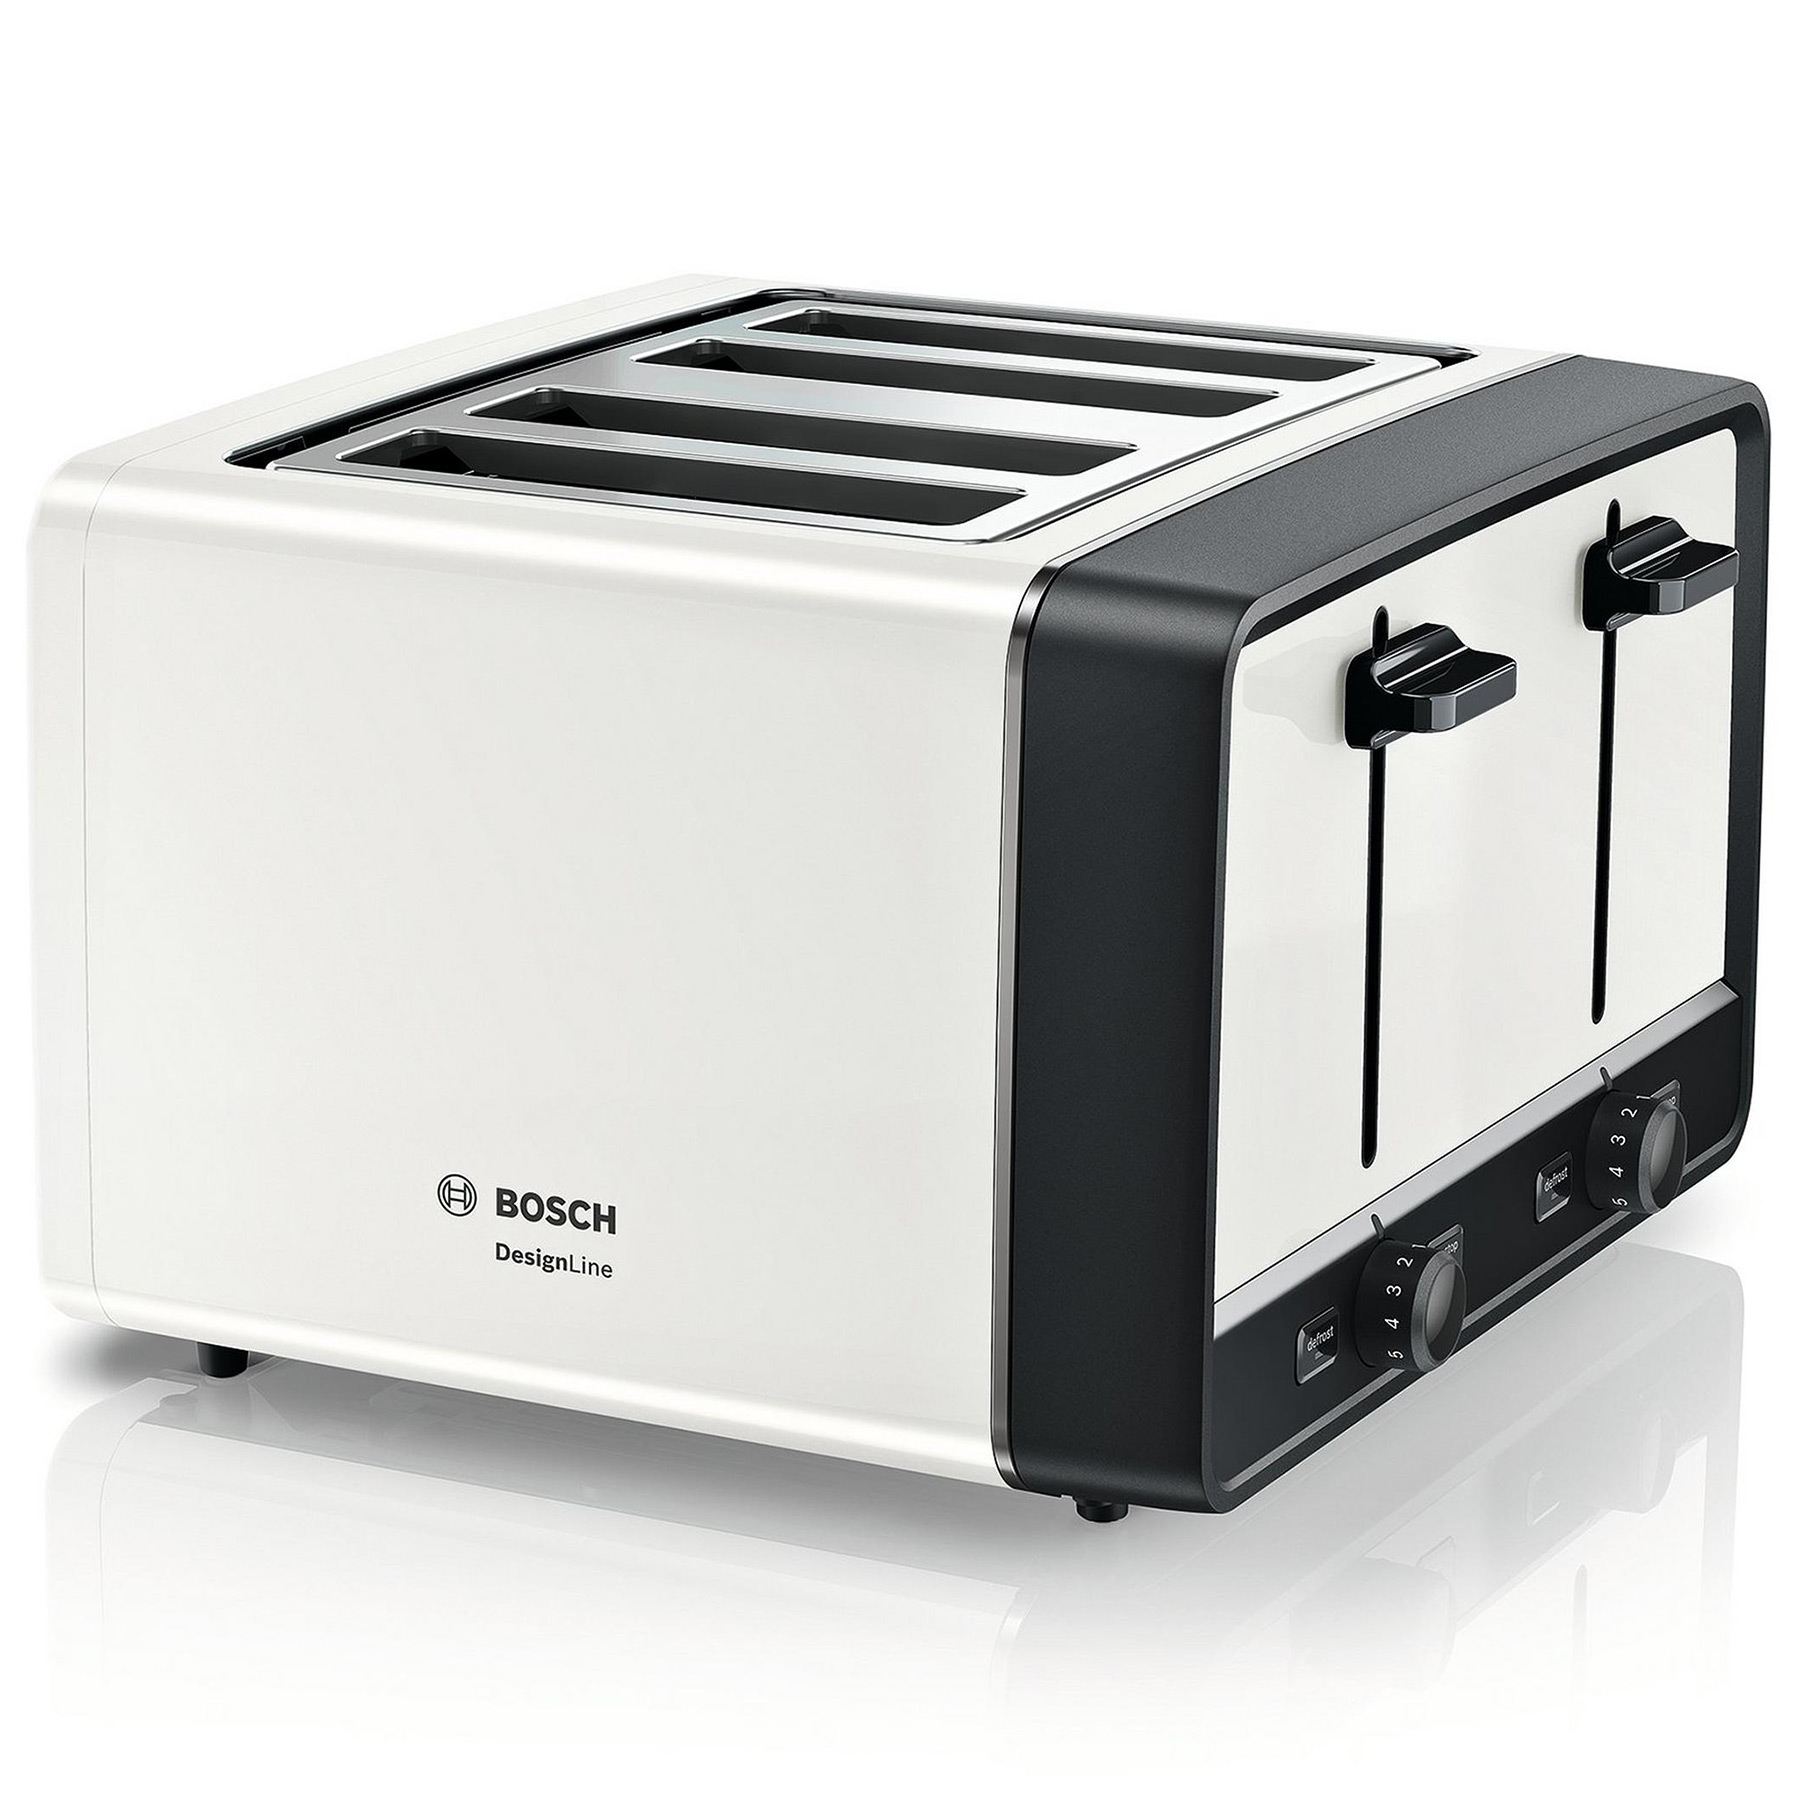 Bosch TAT5P441GB 4 Slice Toaster in White